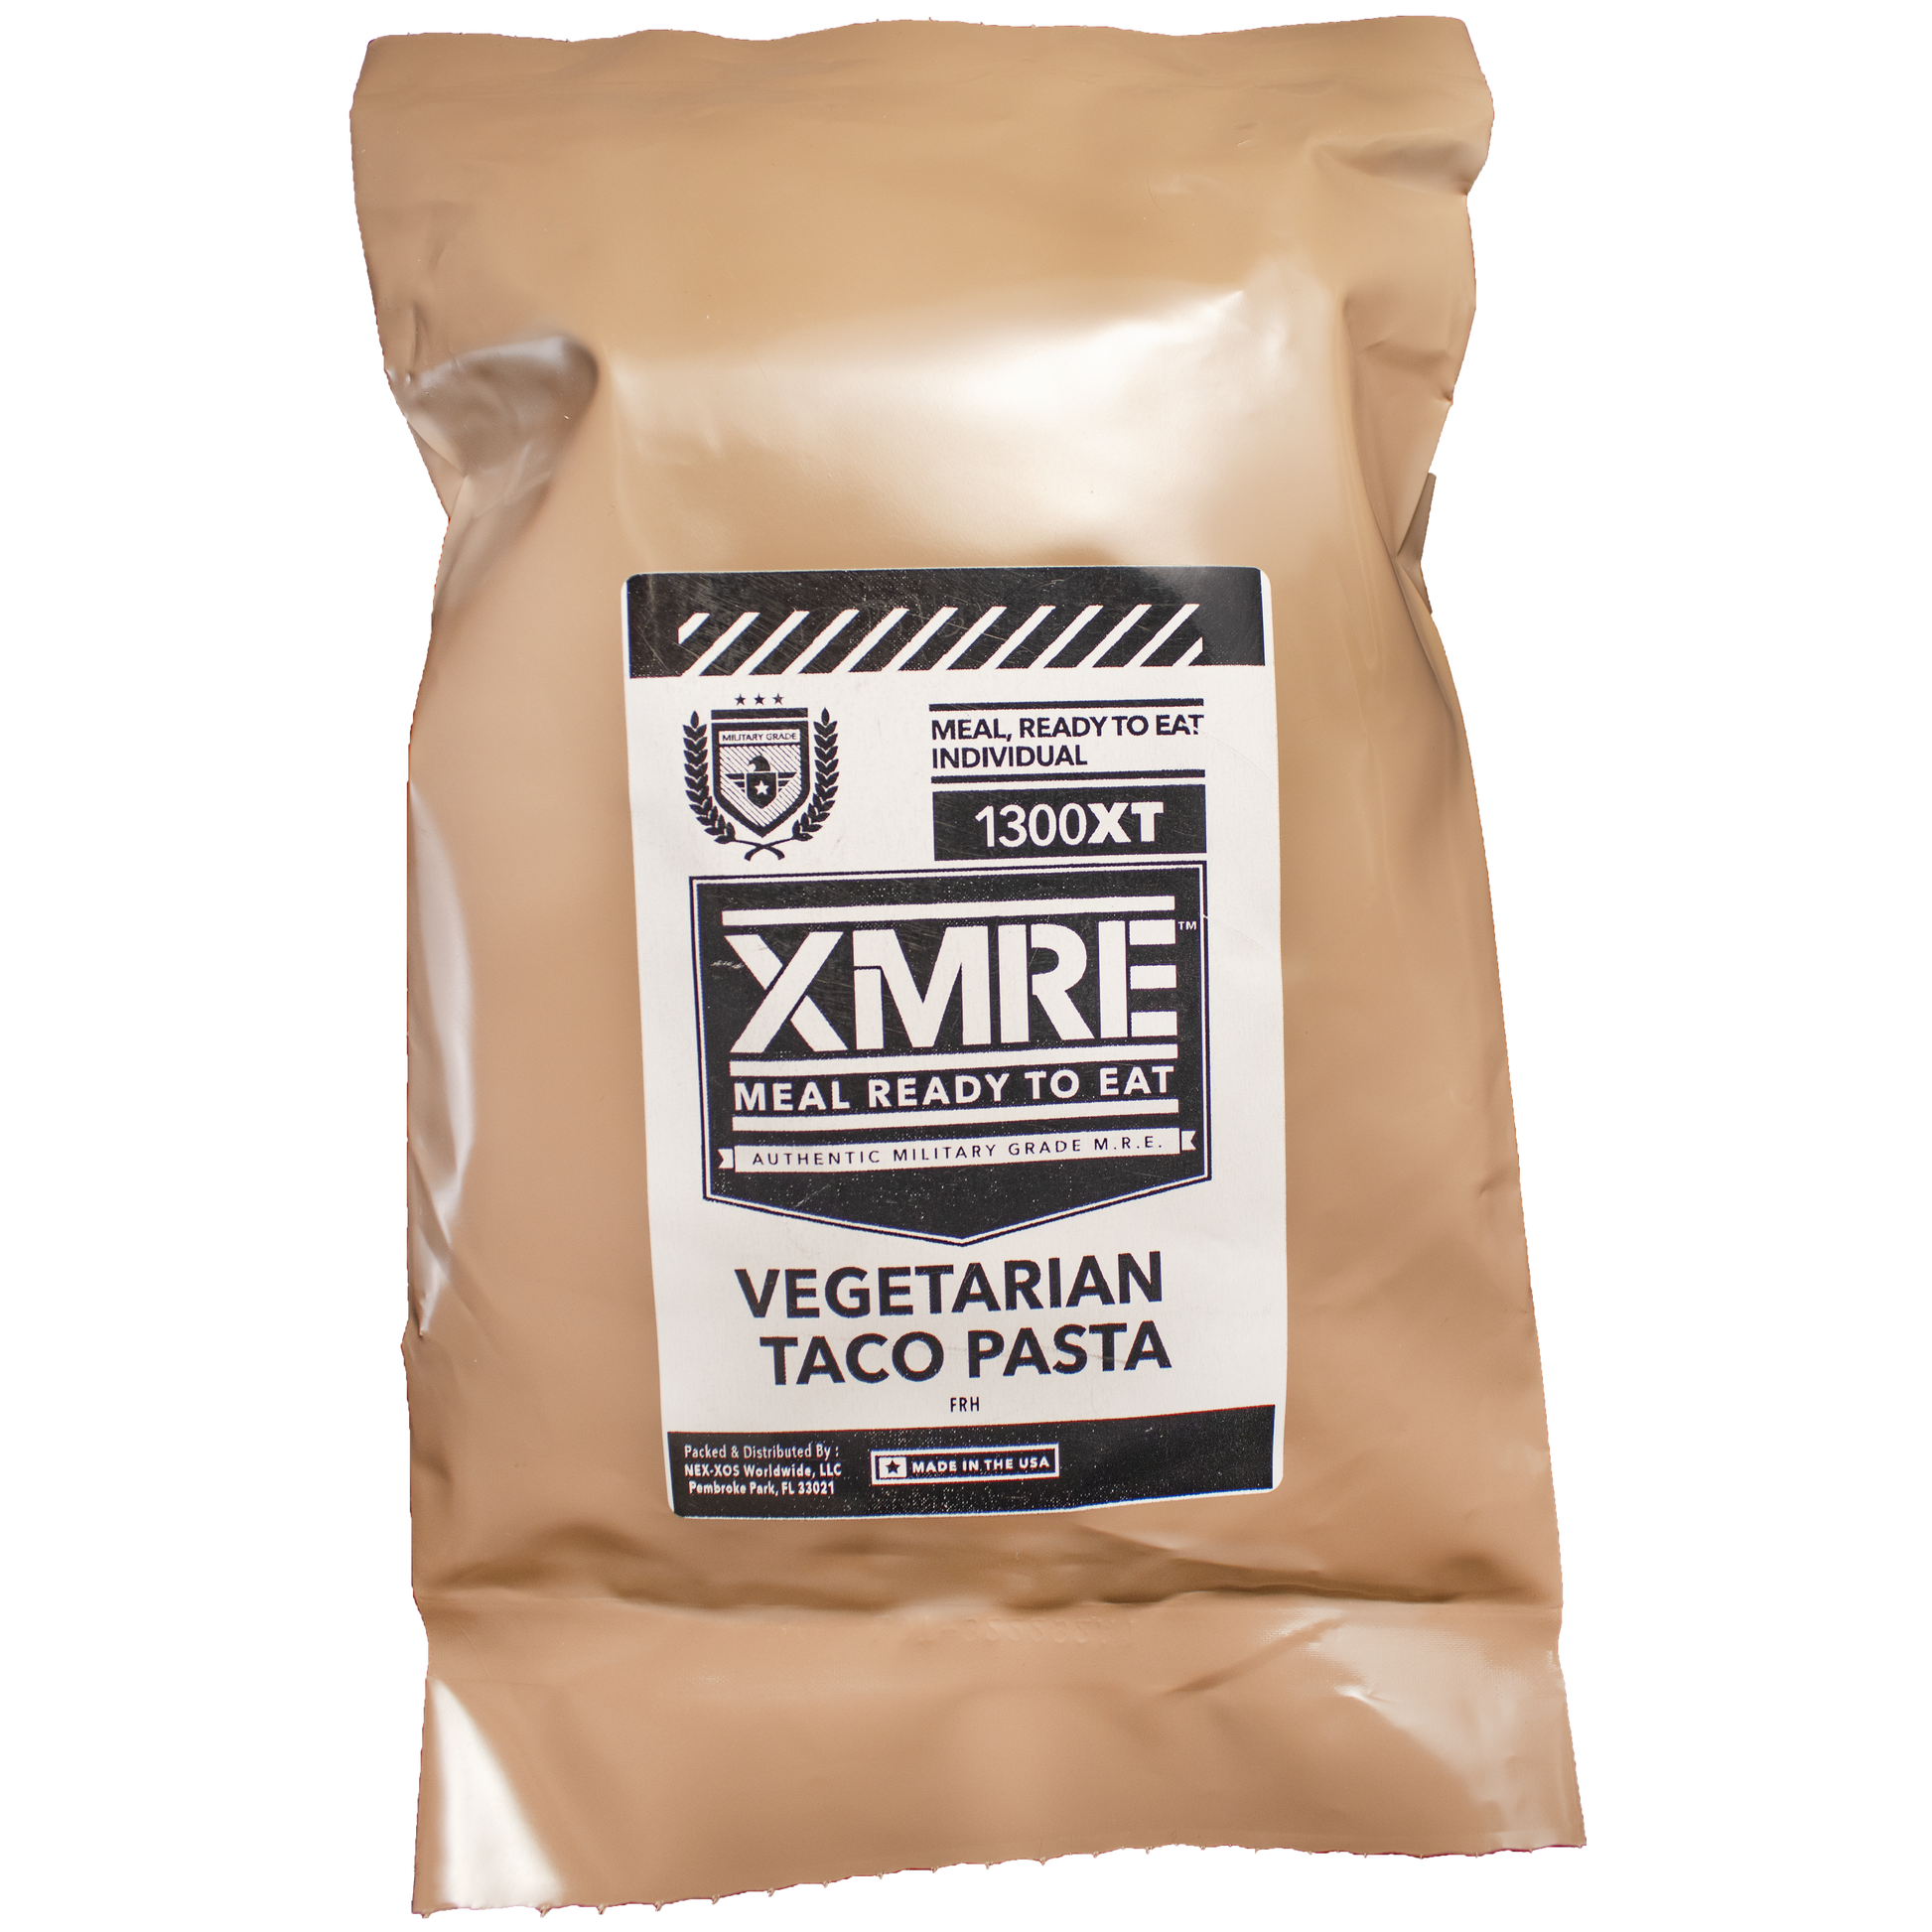 XMRE Vegetarian Taco Pasta w/ FRH. Emergency food supply